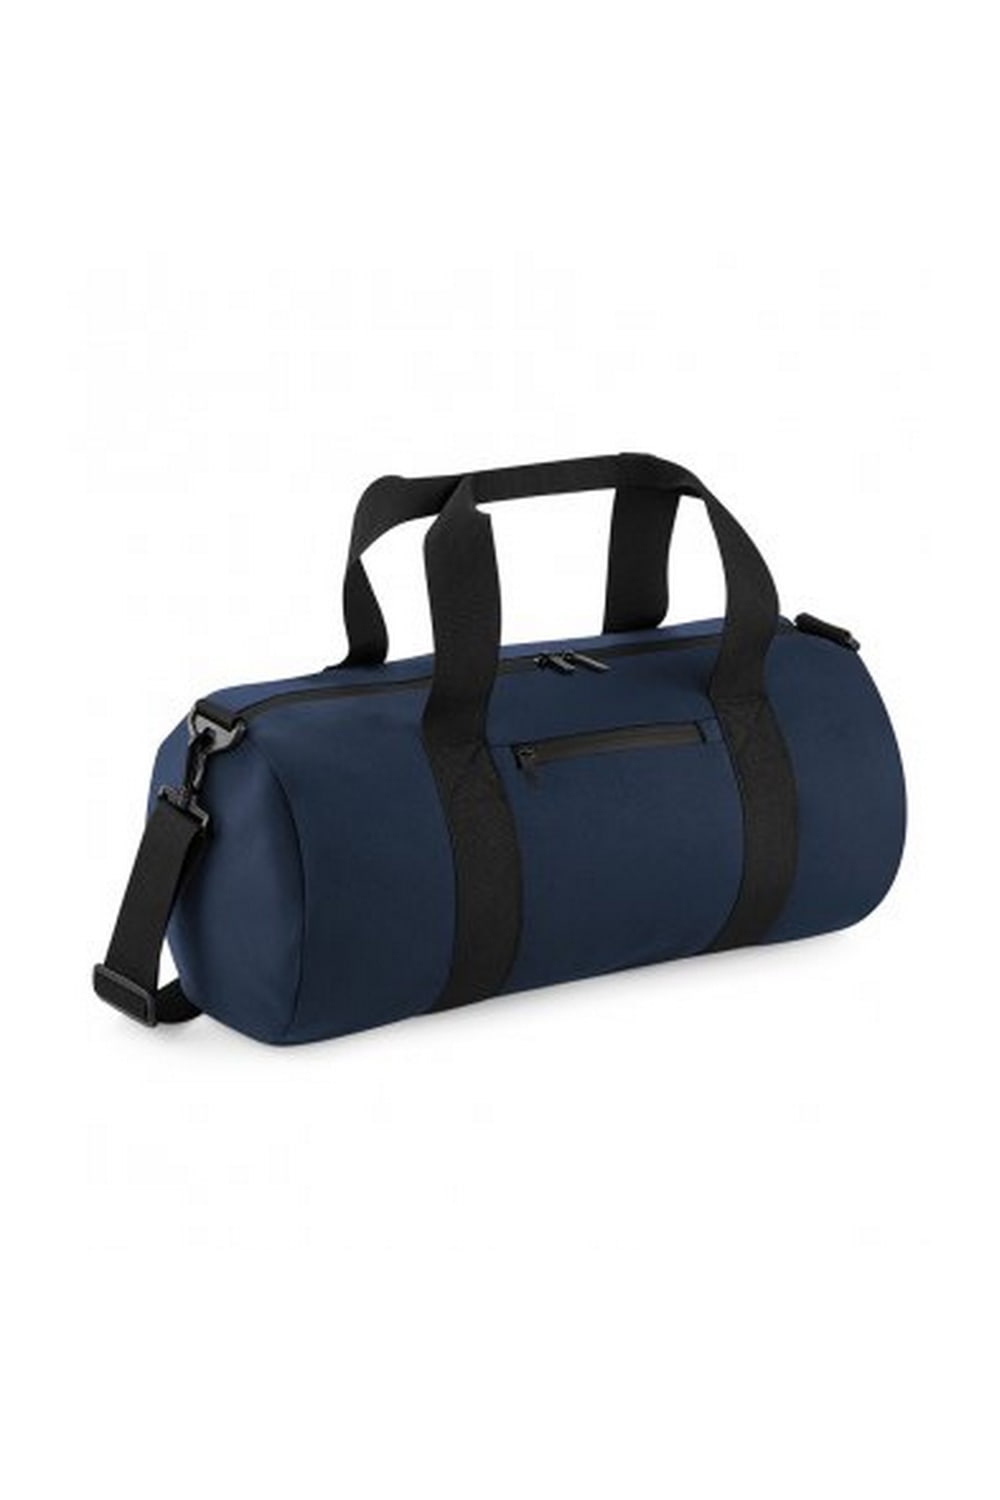 Bagbase Scuba Barrel Bag (Navy Blue) (One Size)